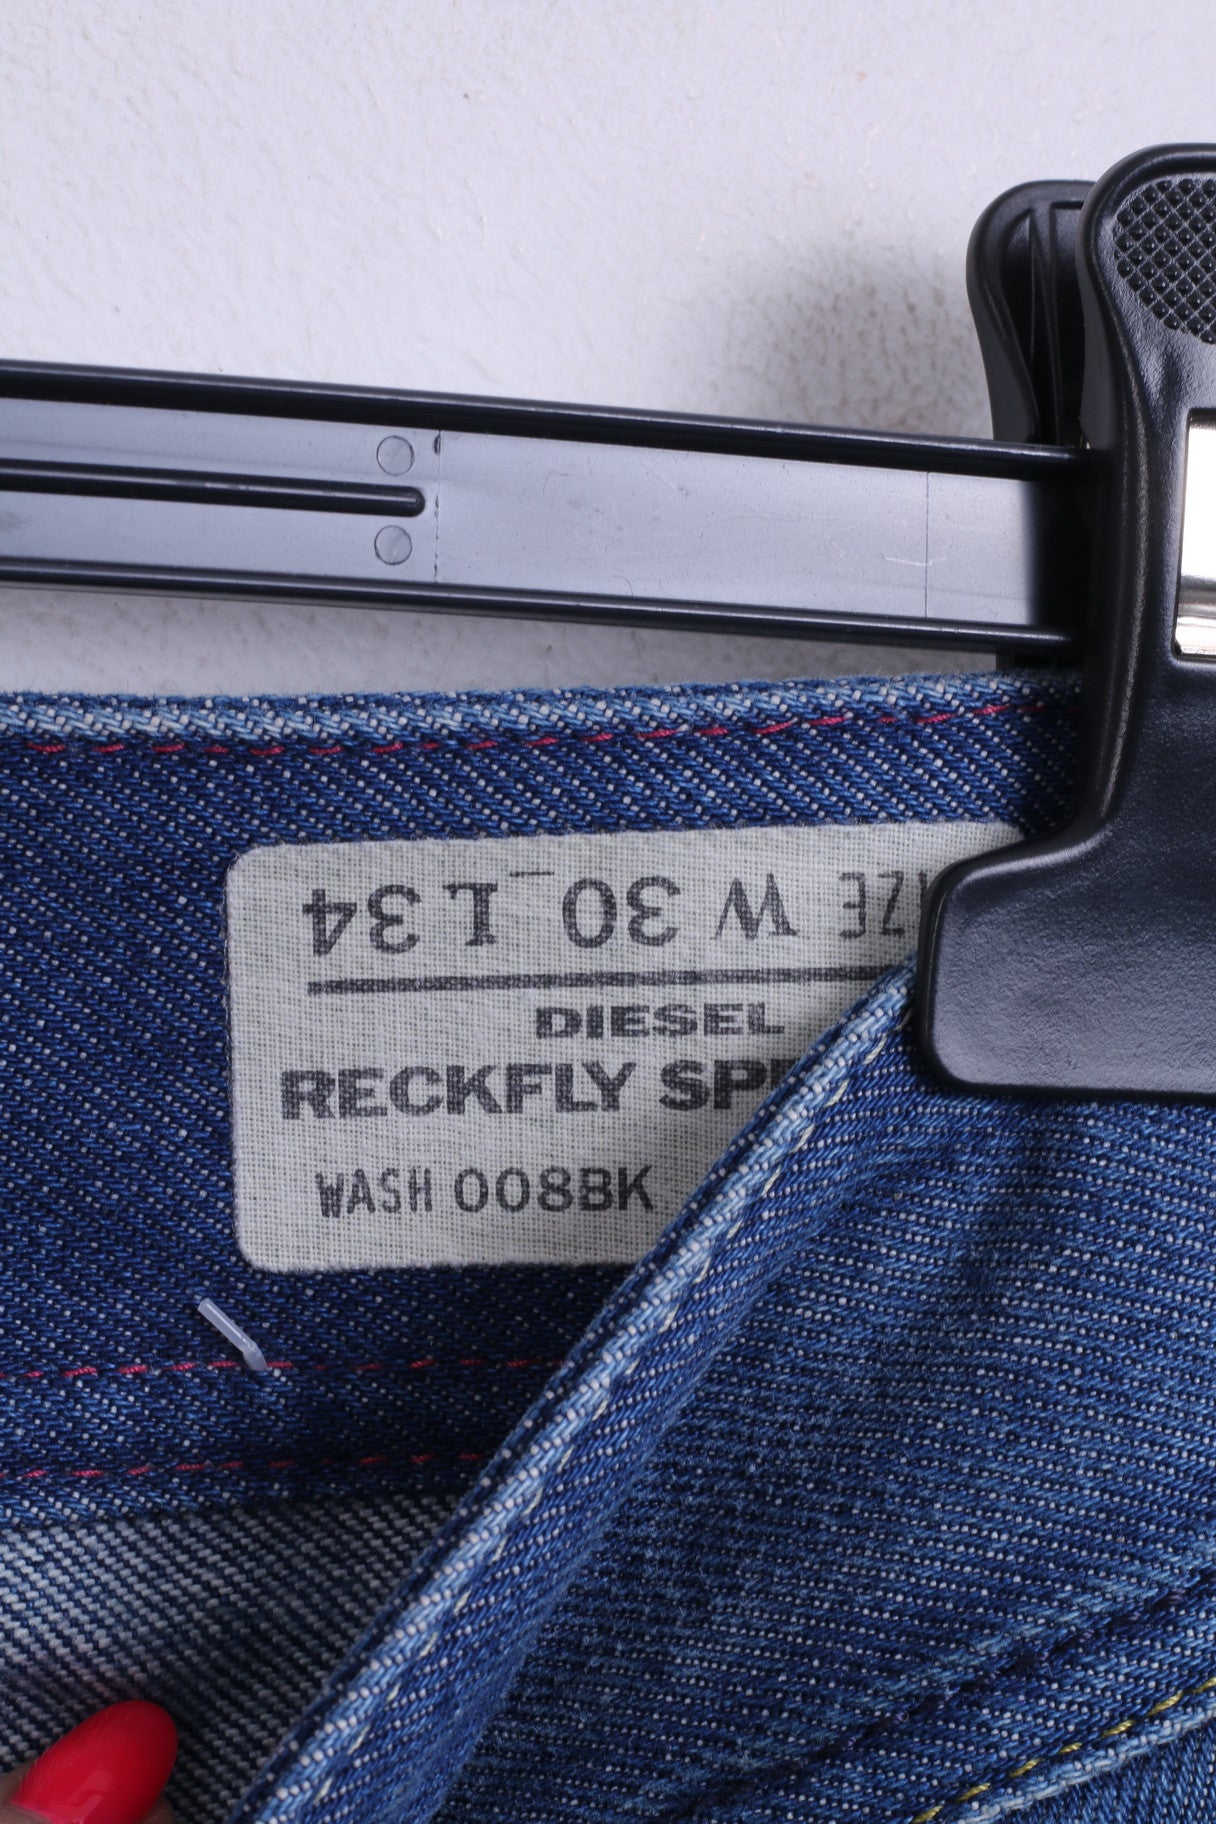 Diesel Reckfly Special Womens W30 L34 Trousers Jeans Cotton Denim